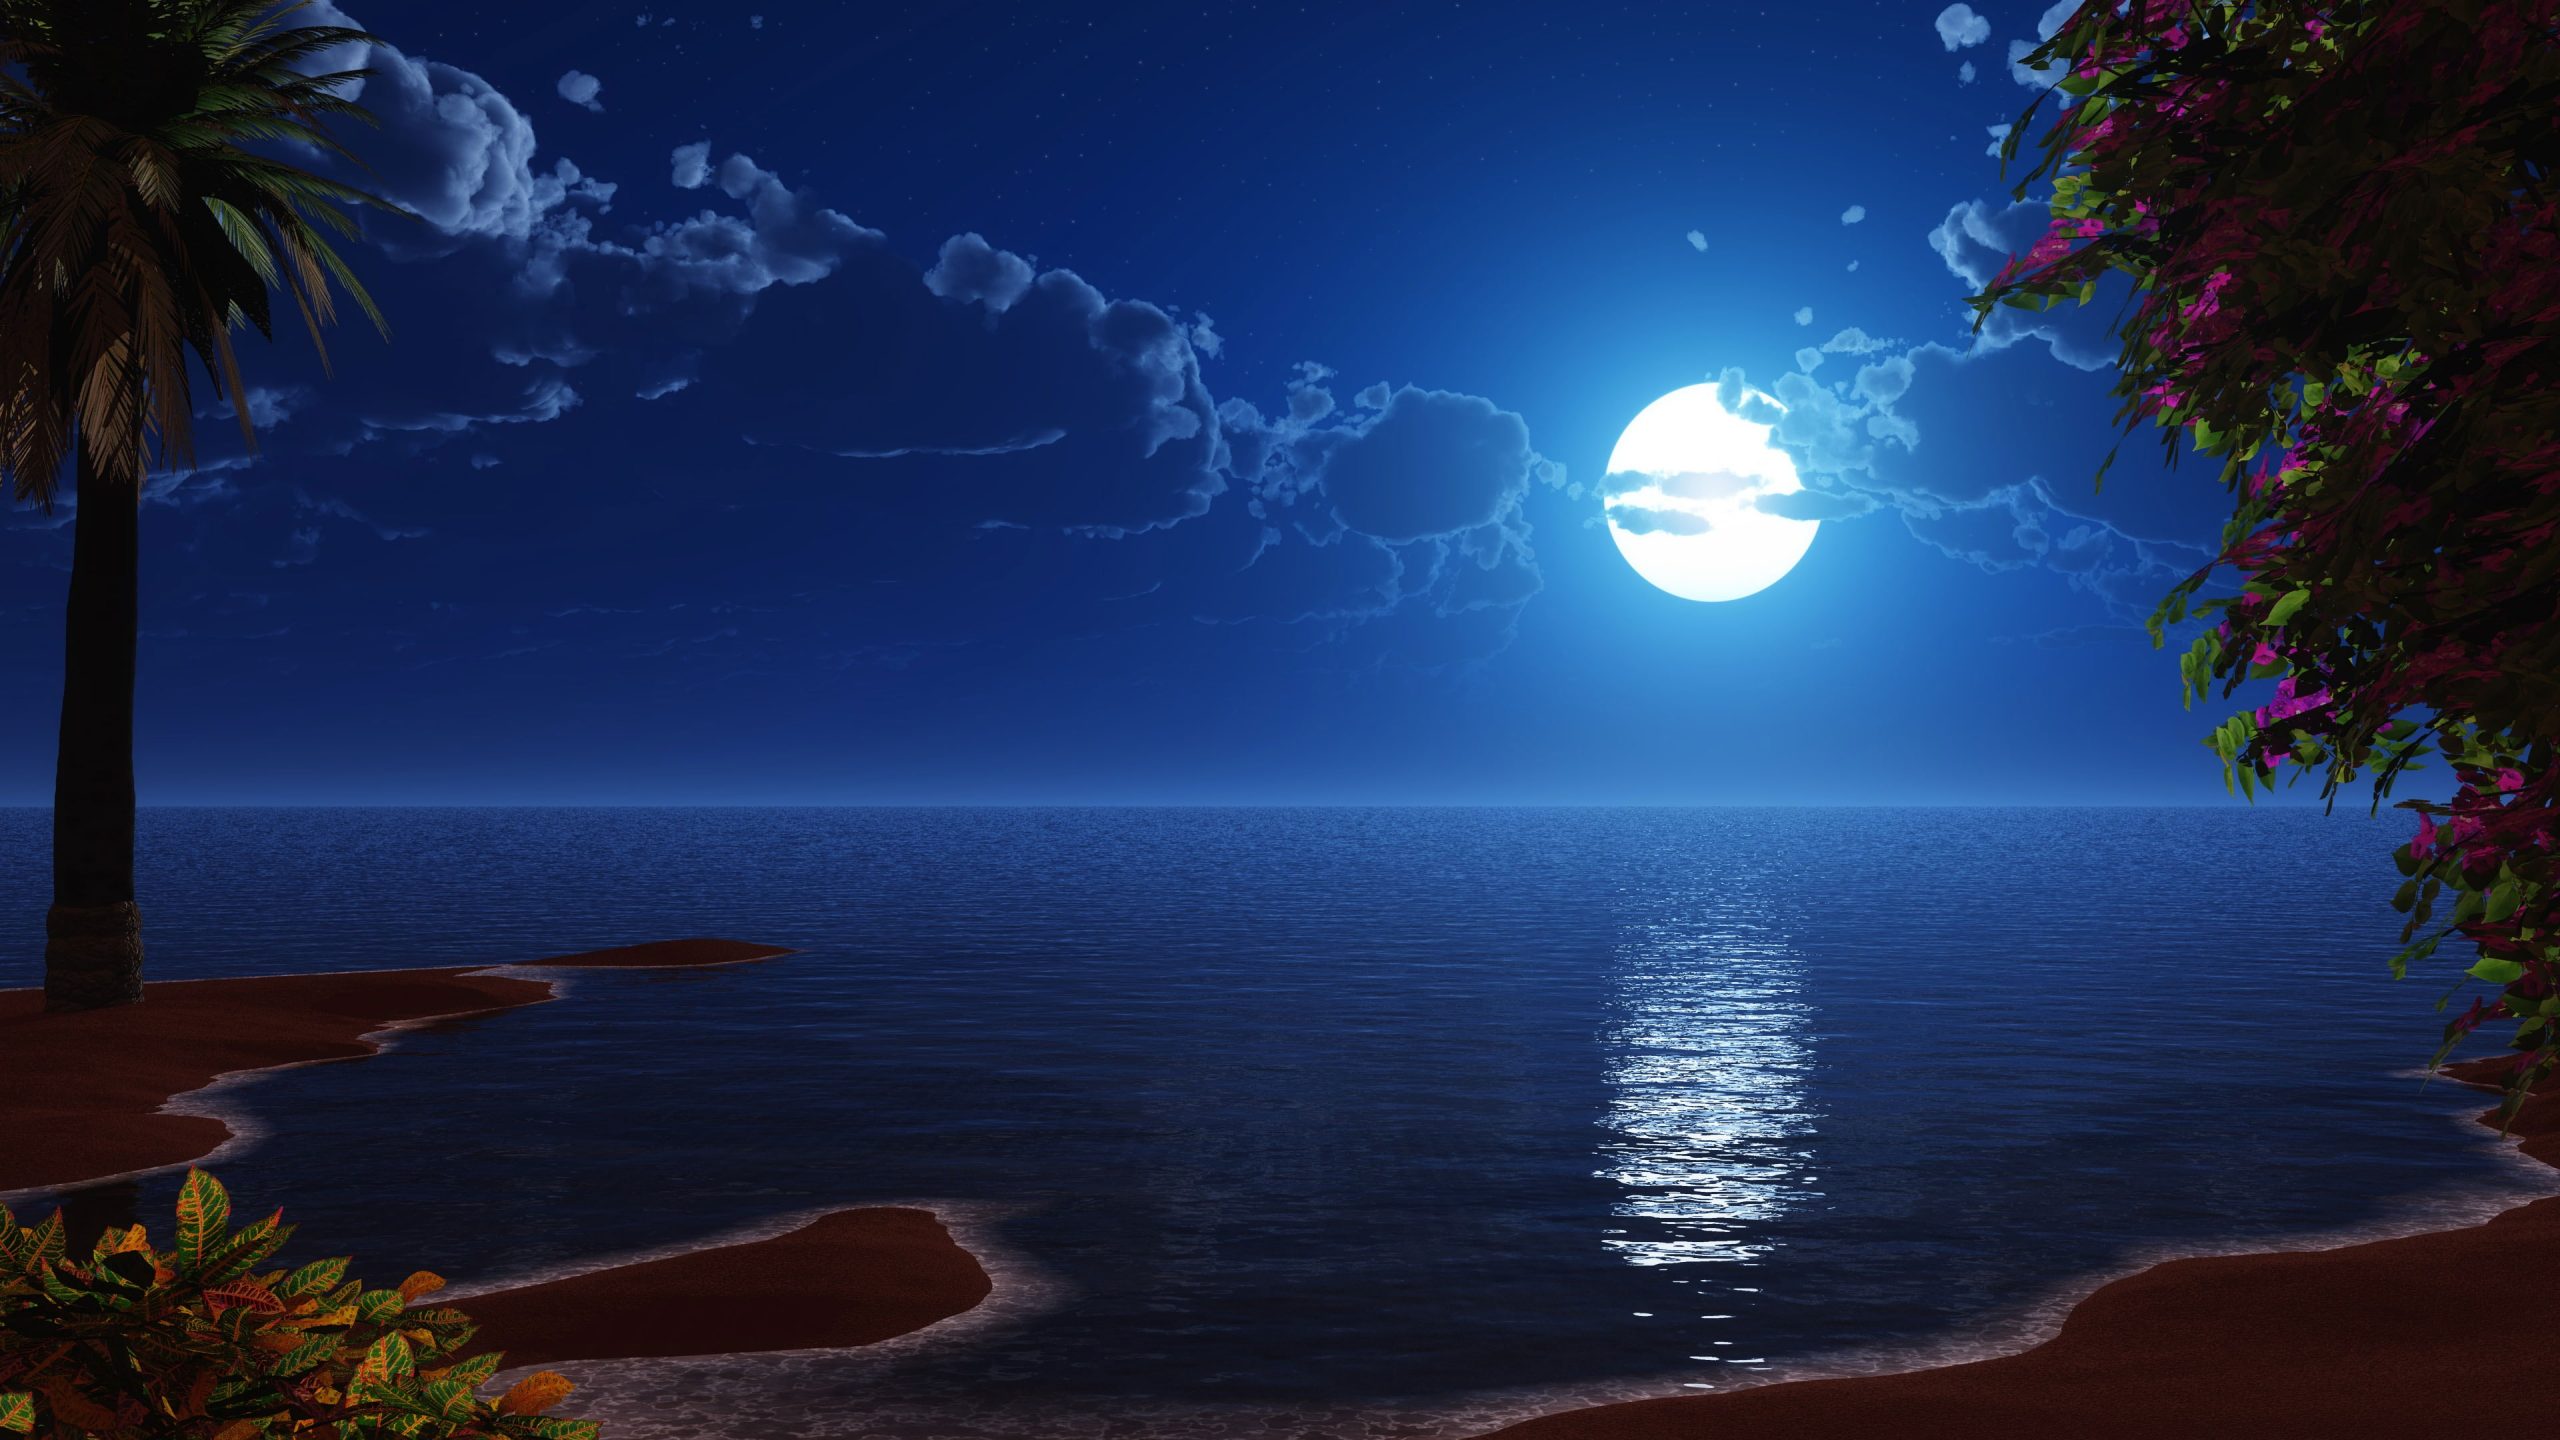 Fantasy landscape wallpaper, beach, night sky, seascape, ocean, reflection